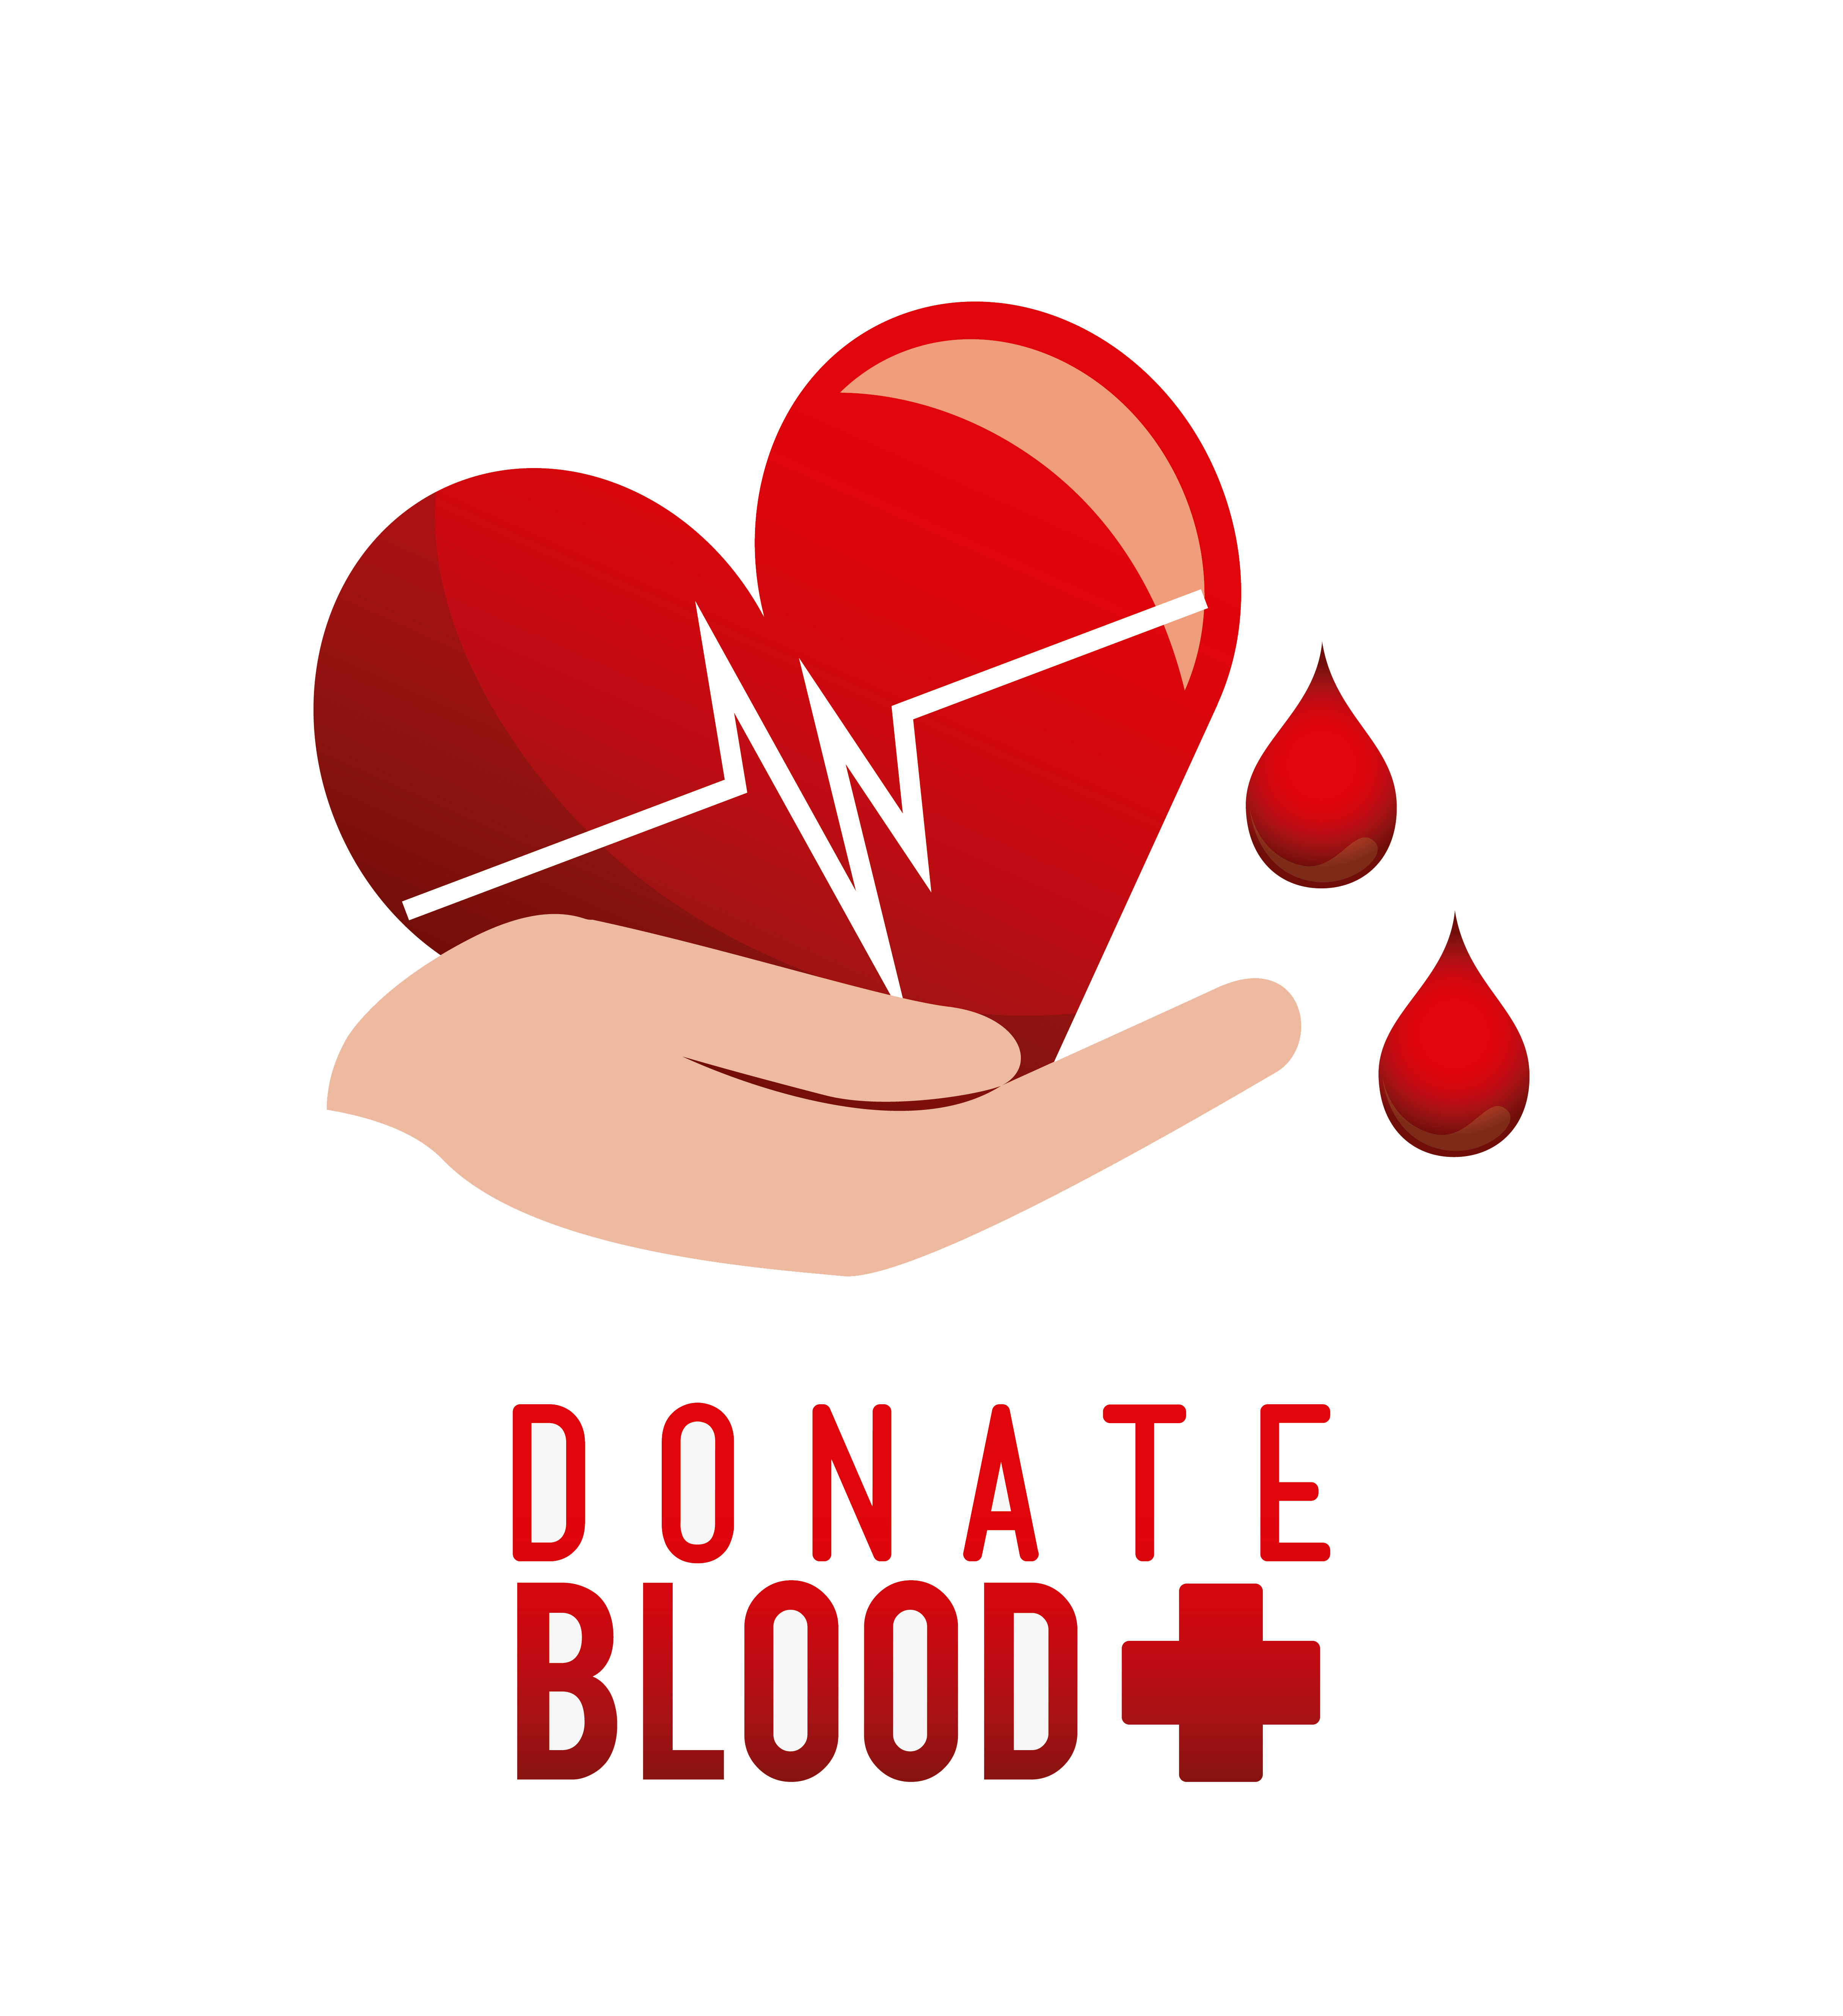 Донорство крови. Blood donation донорство. Донор логотип. Логотип донорства крови. День донора символ.